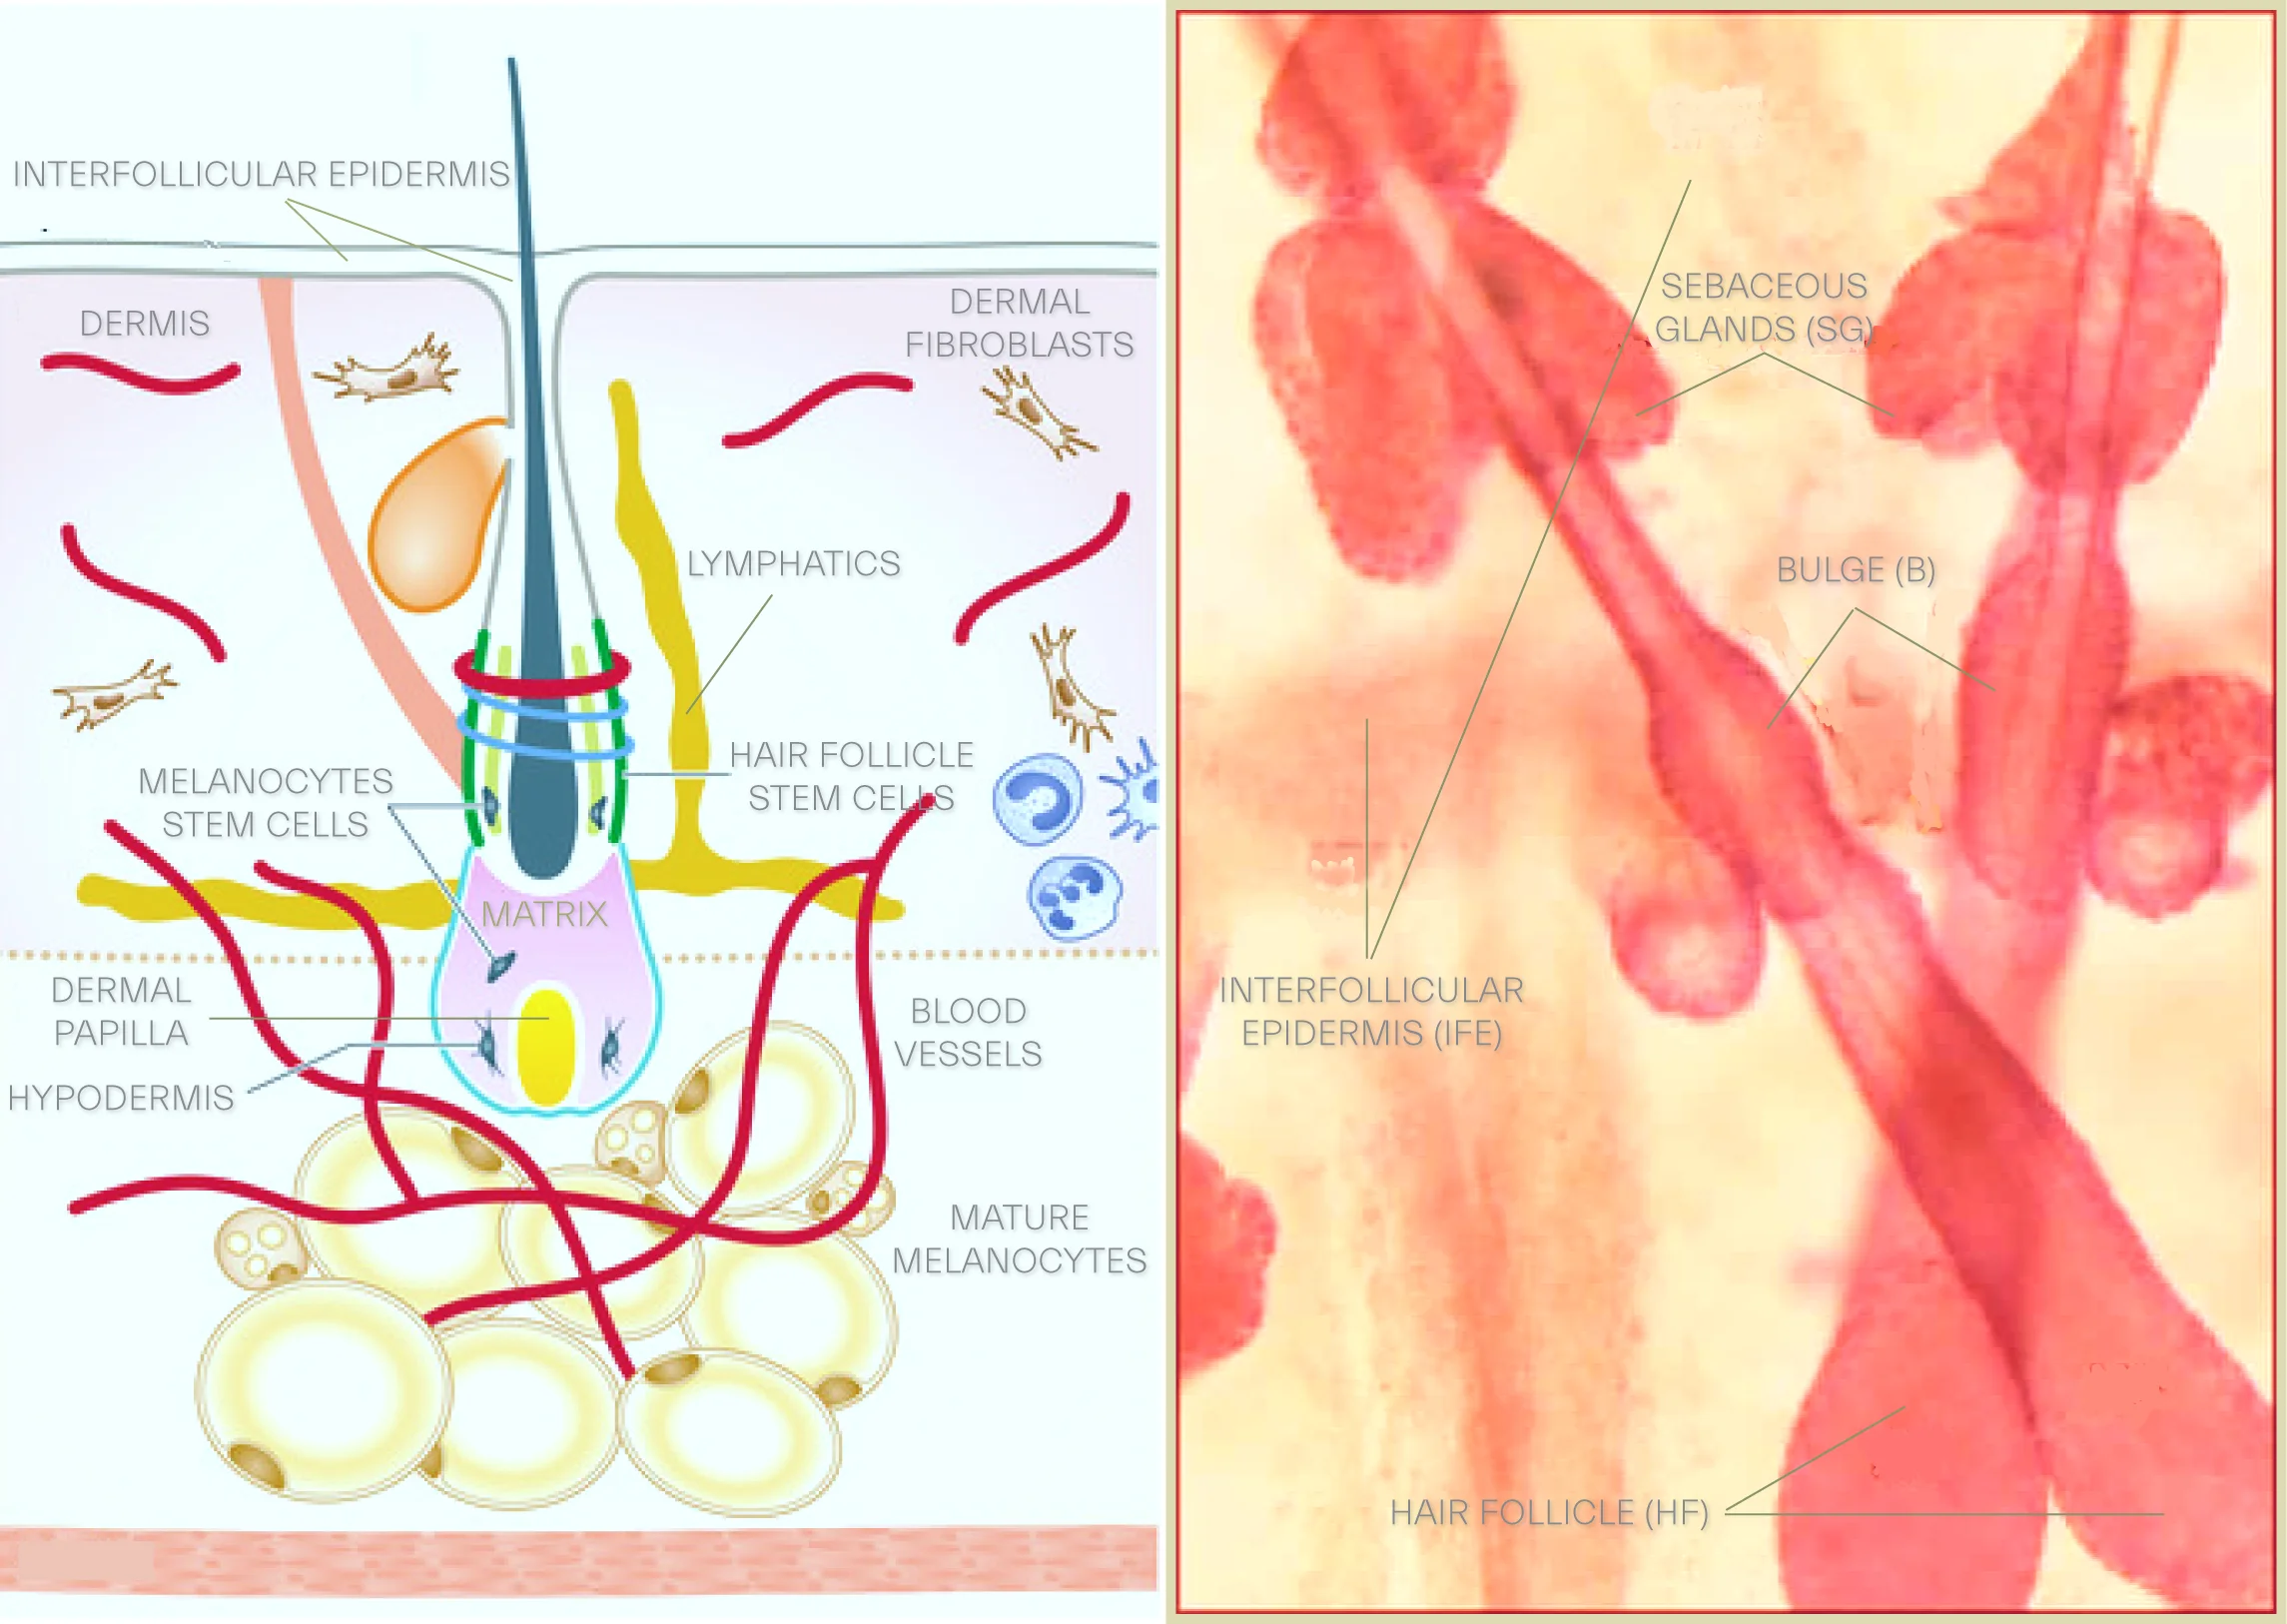  Hair follicle stem cells in relation to sebocytes and epidermal stem cells